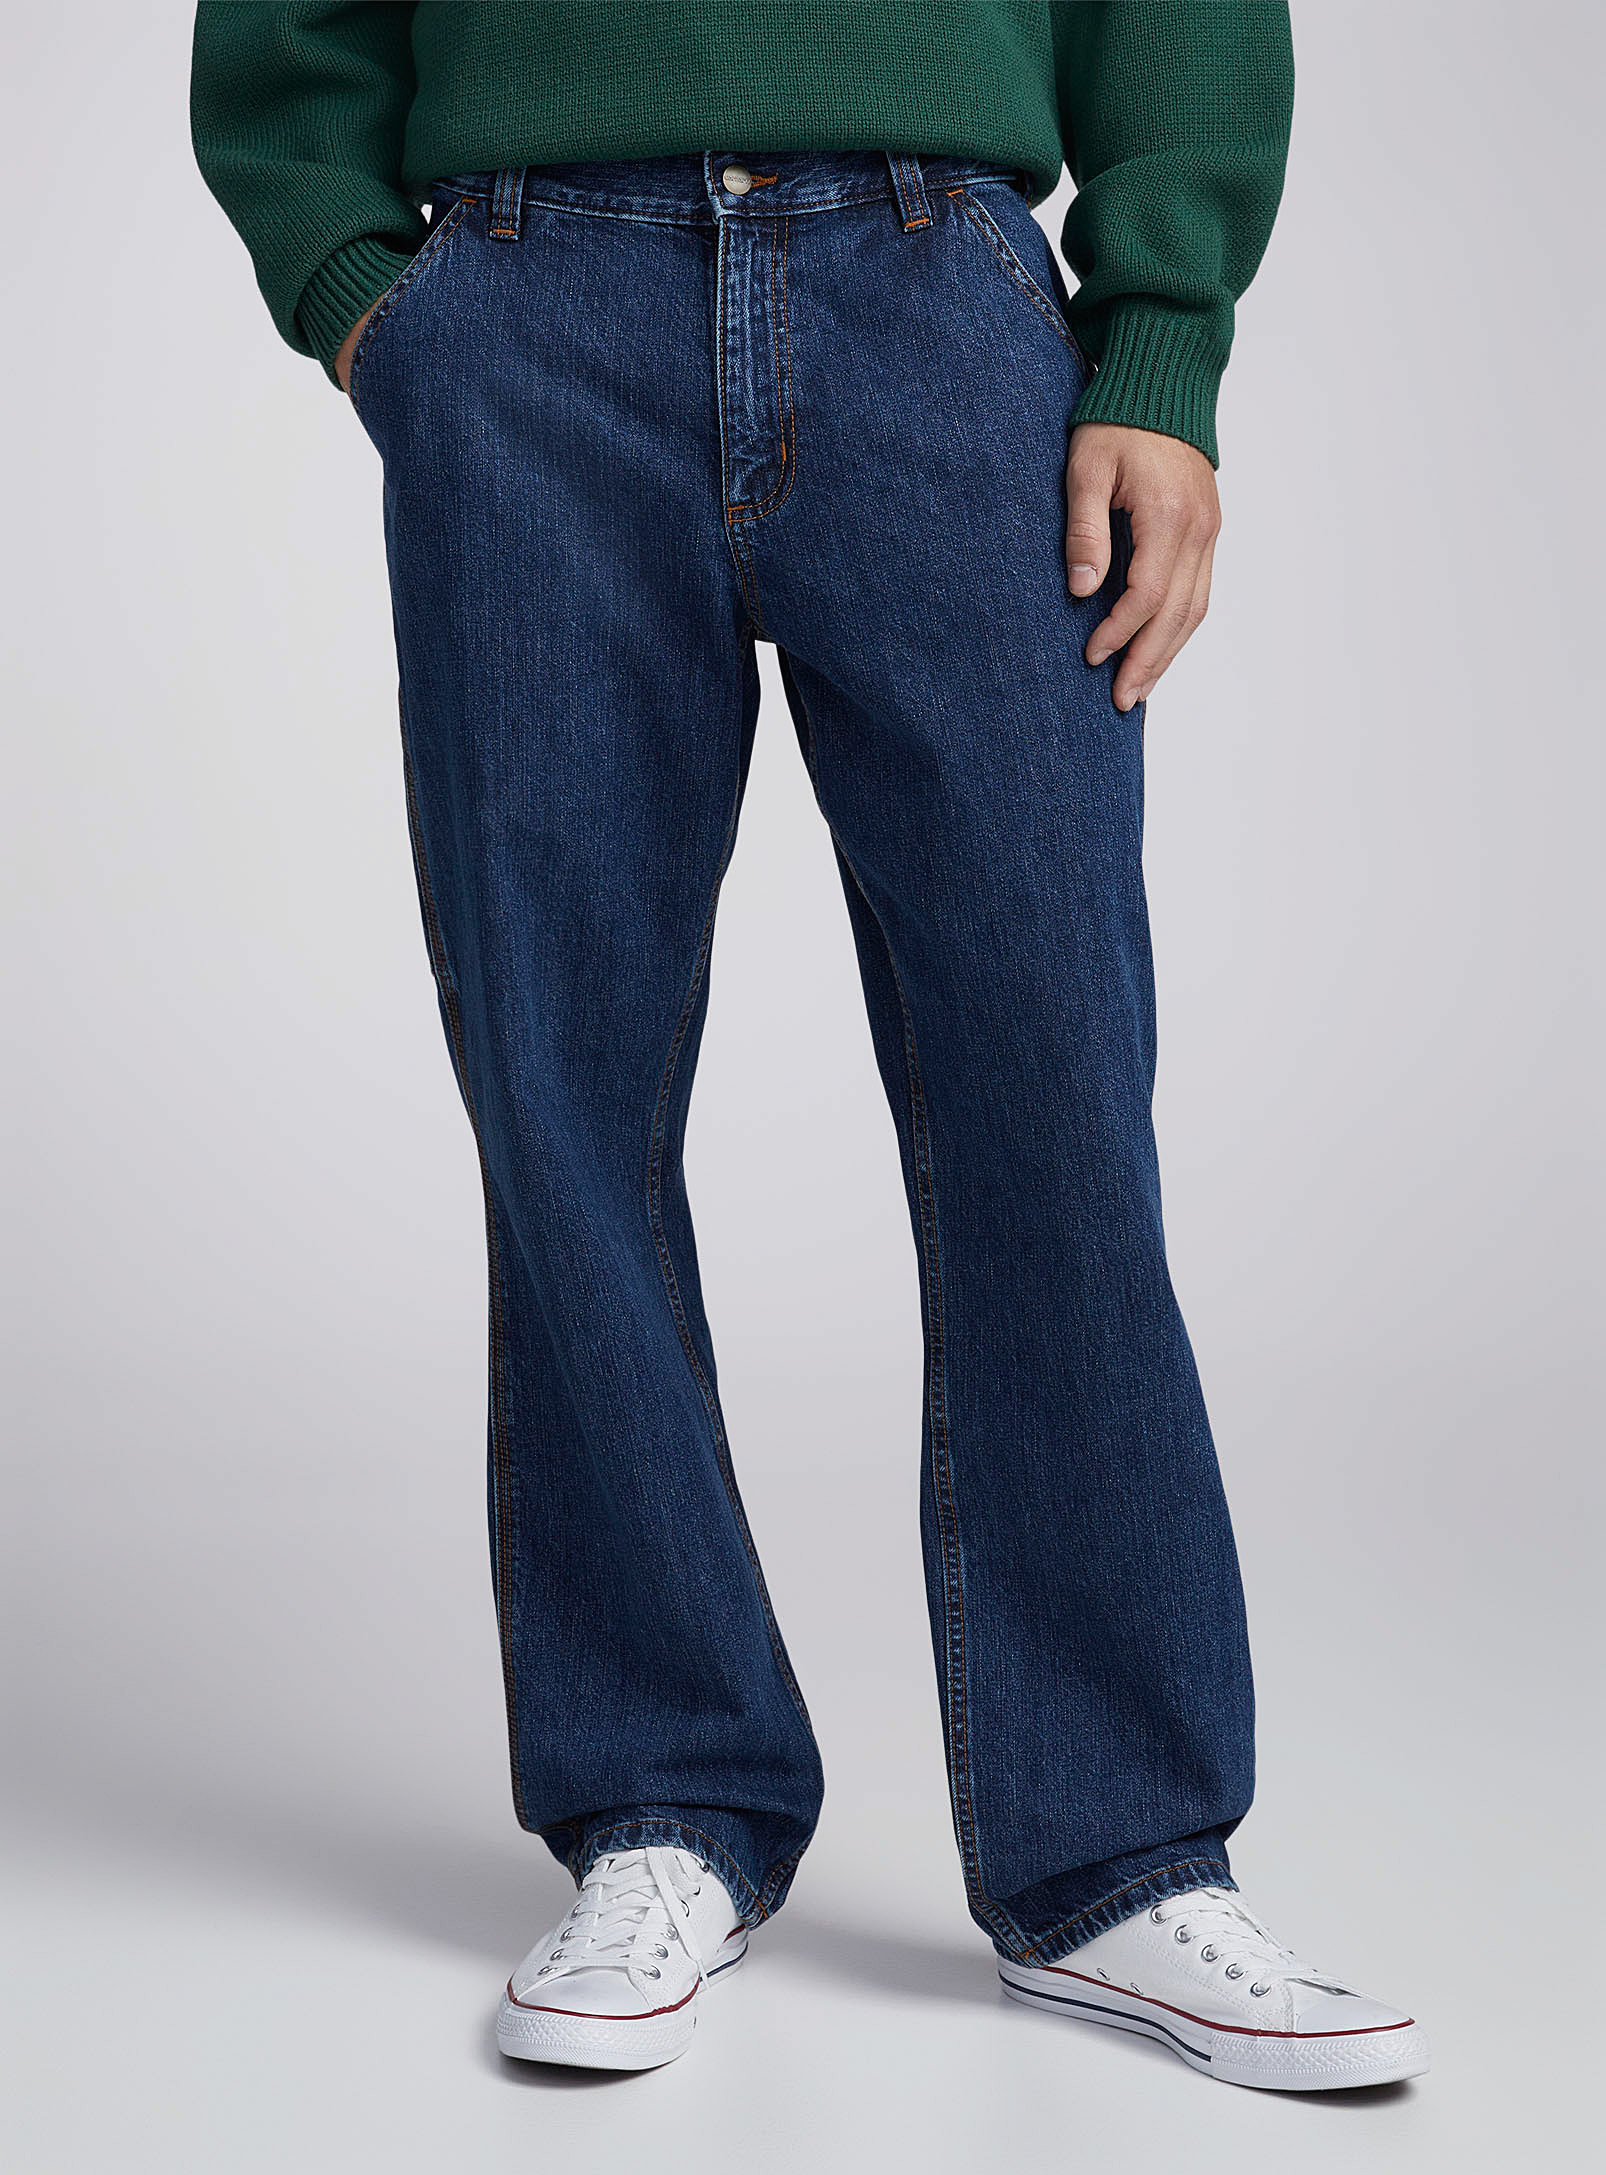 Carhartt - Le jean menuisier bleu moyen Coupe ample